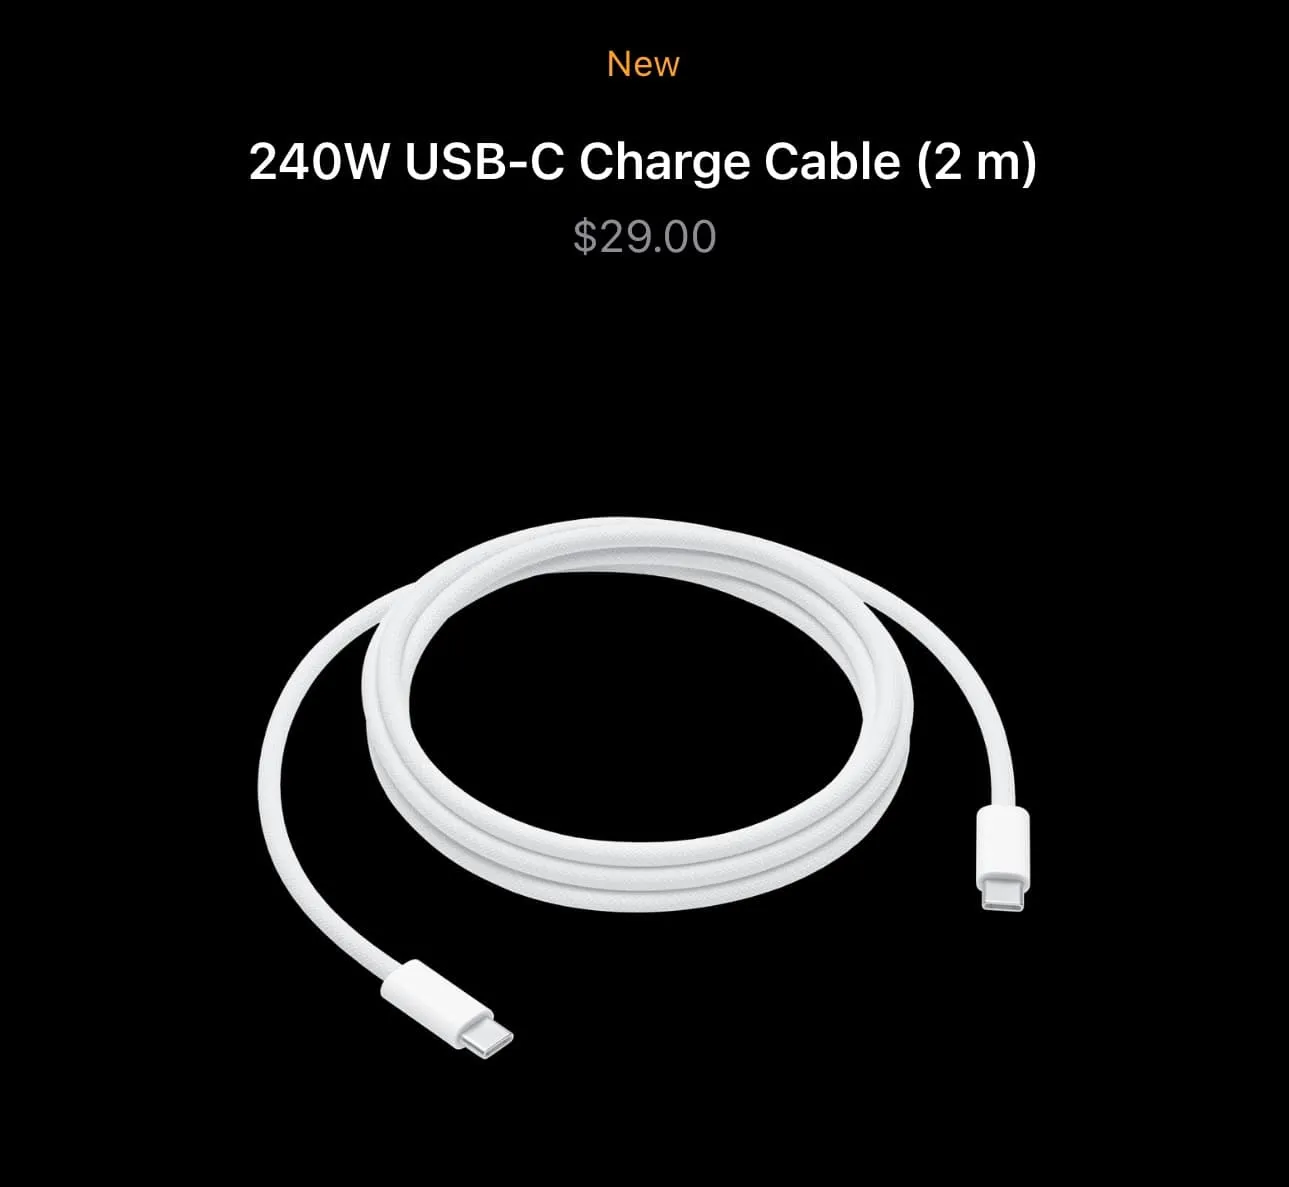 Apple 240W USB-C 2 米充電線。